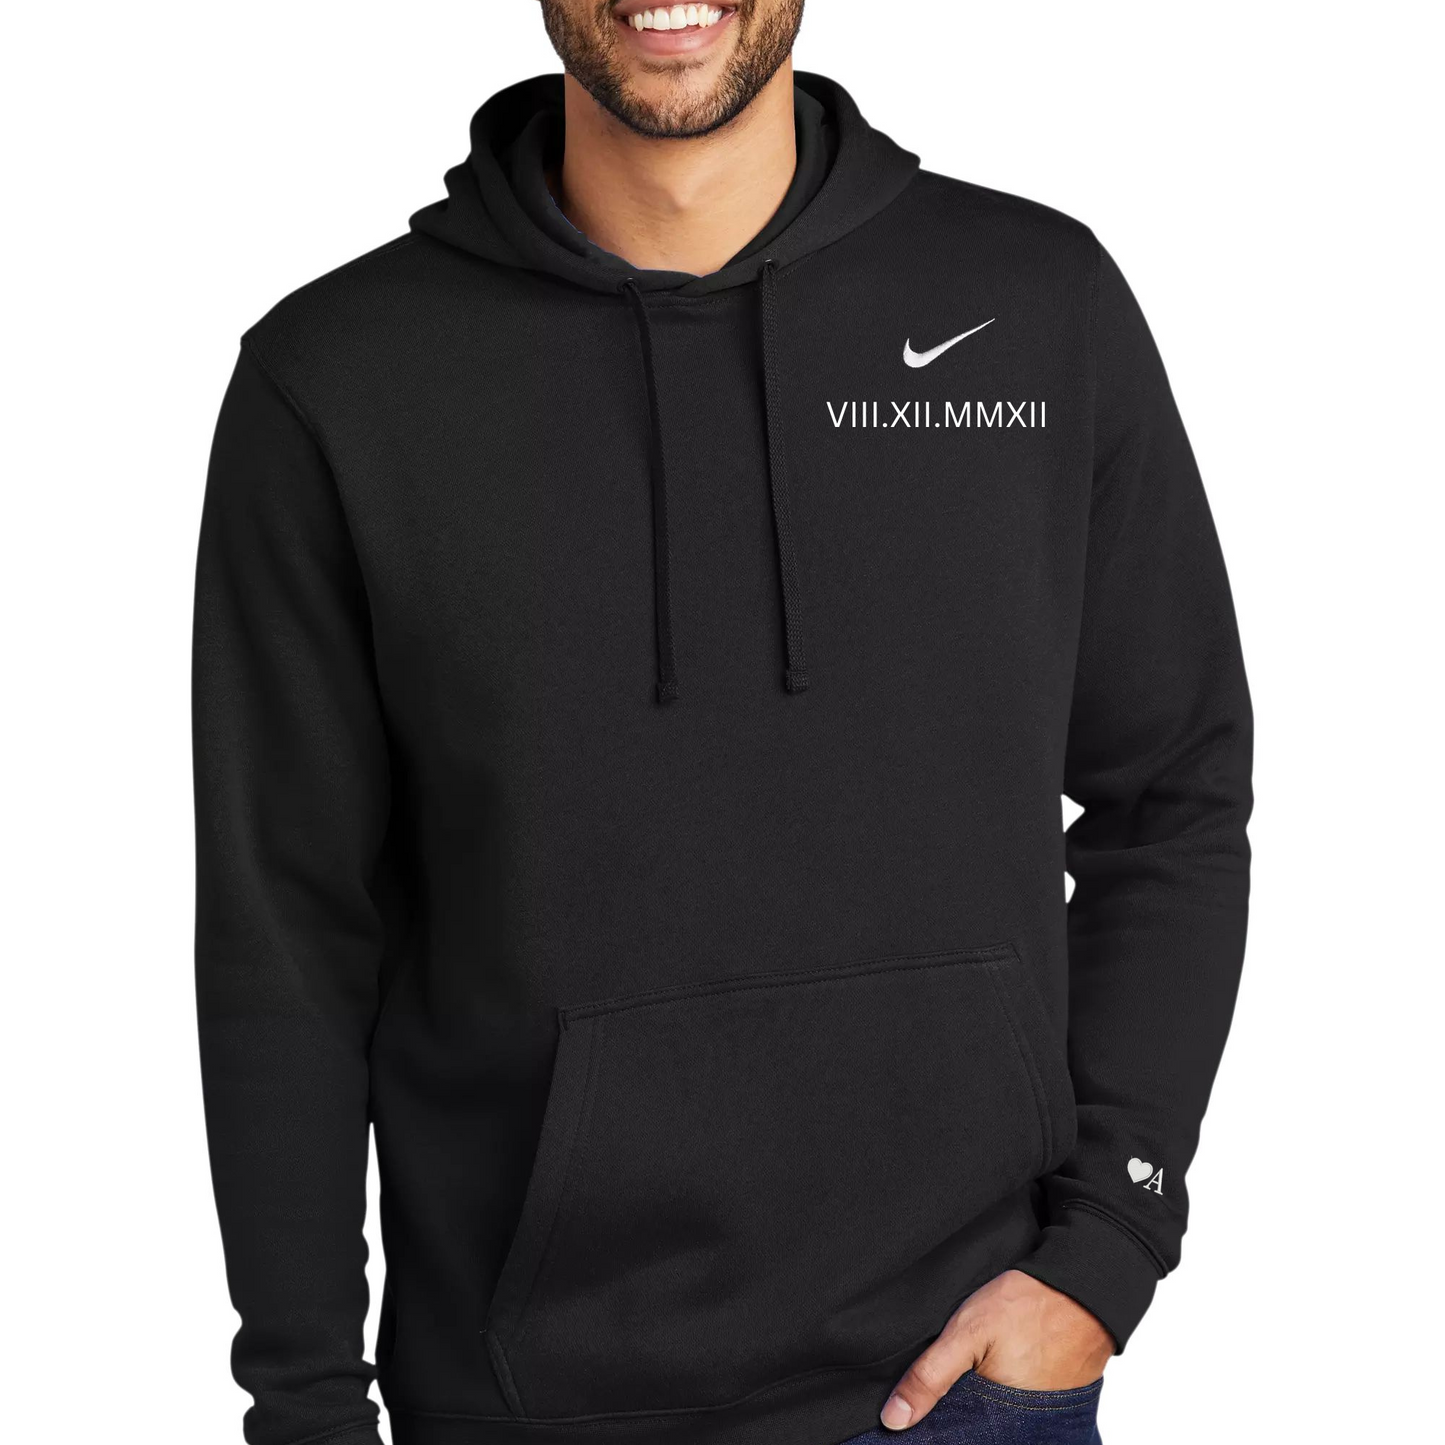 Nike Embroidered Anniversary Date Hoodie, Roman Numerals couple's sweatshirt, Anniversary gift